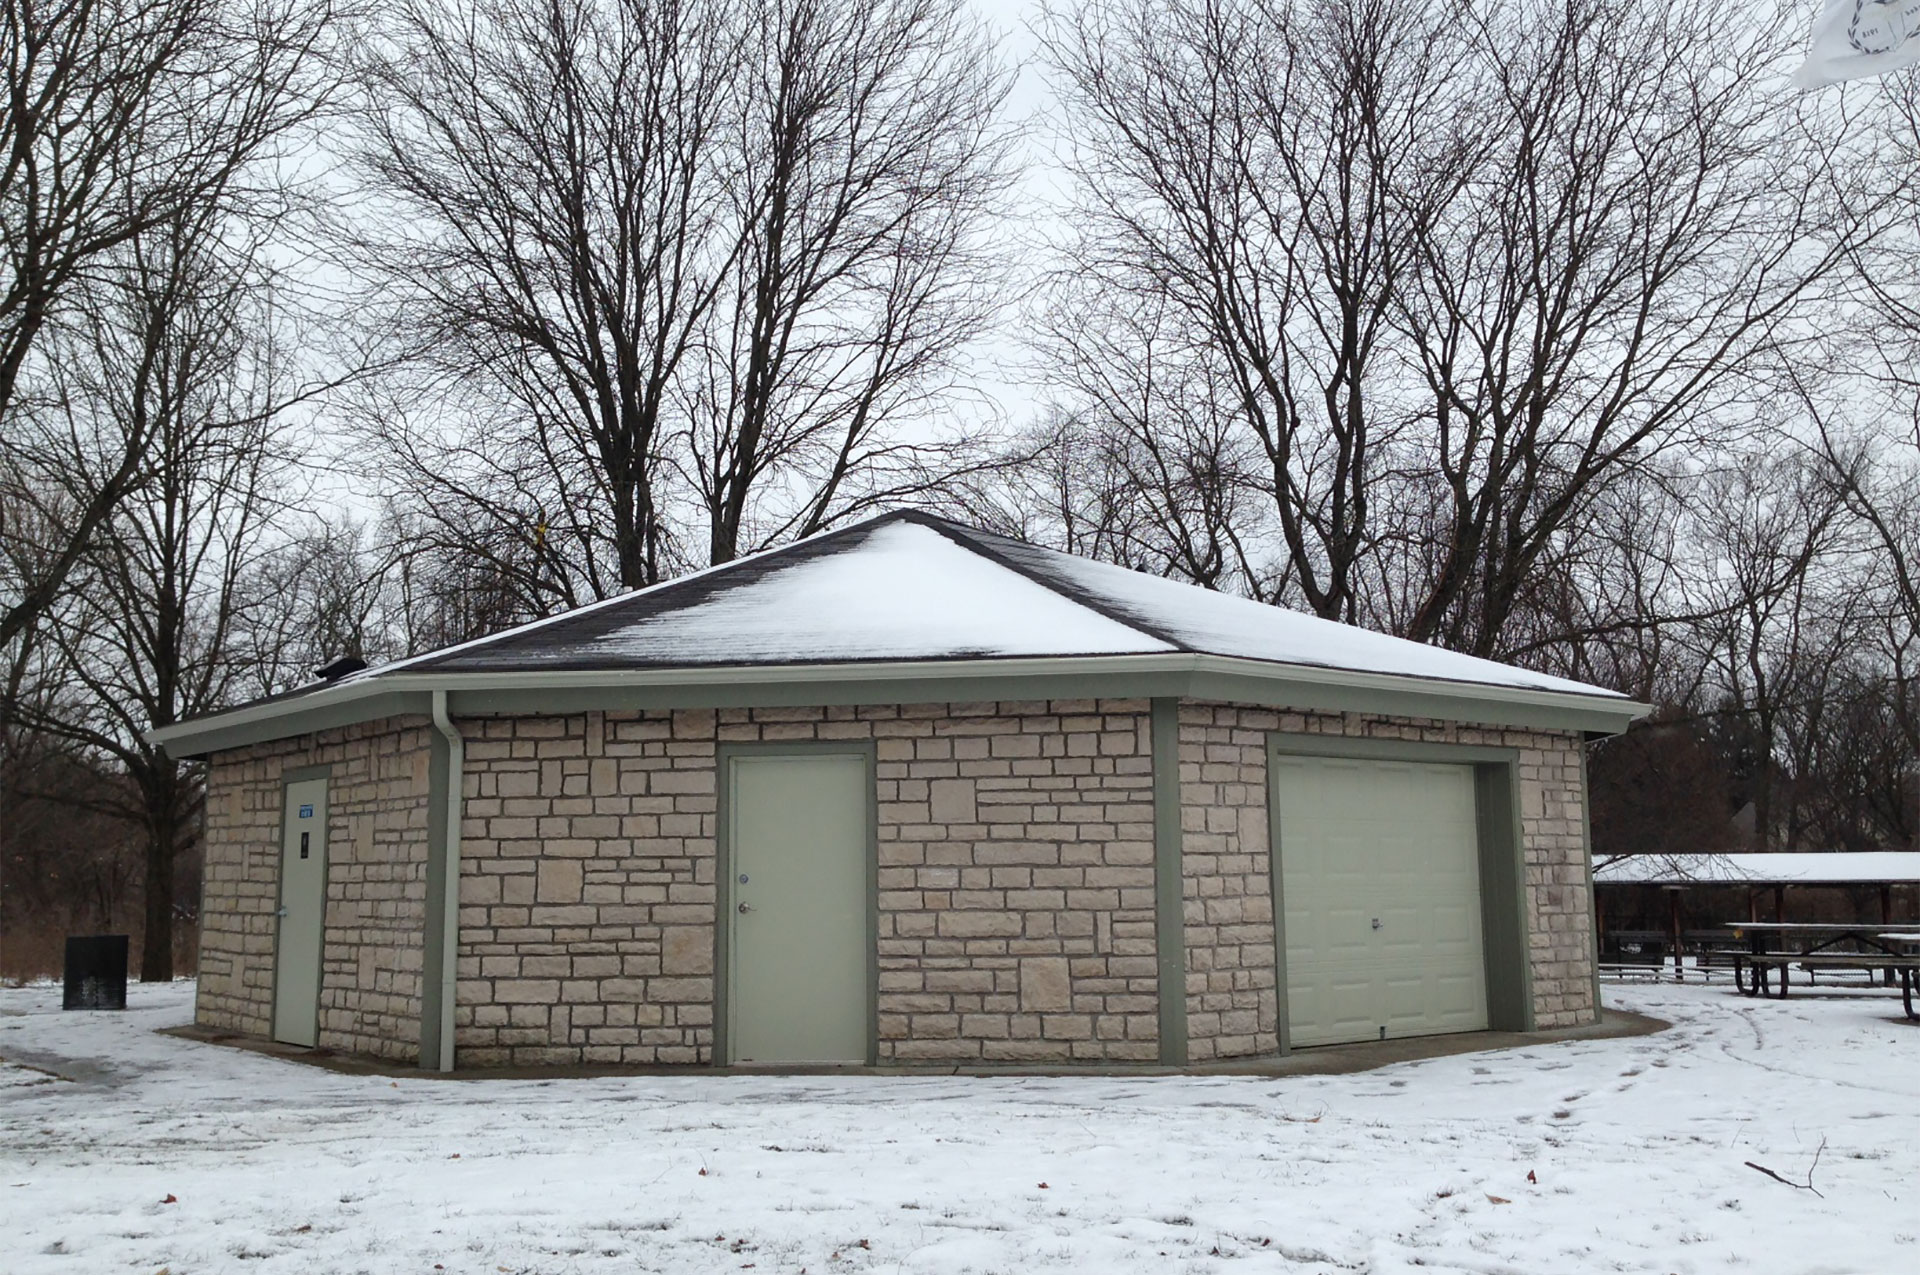 Fancyburg Shelter in Winter